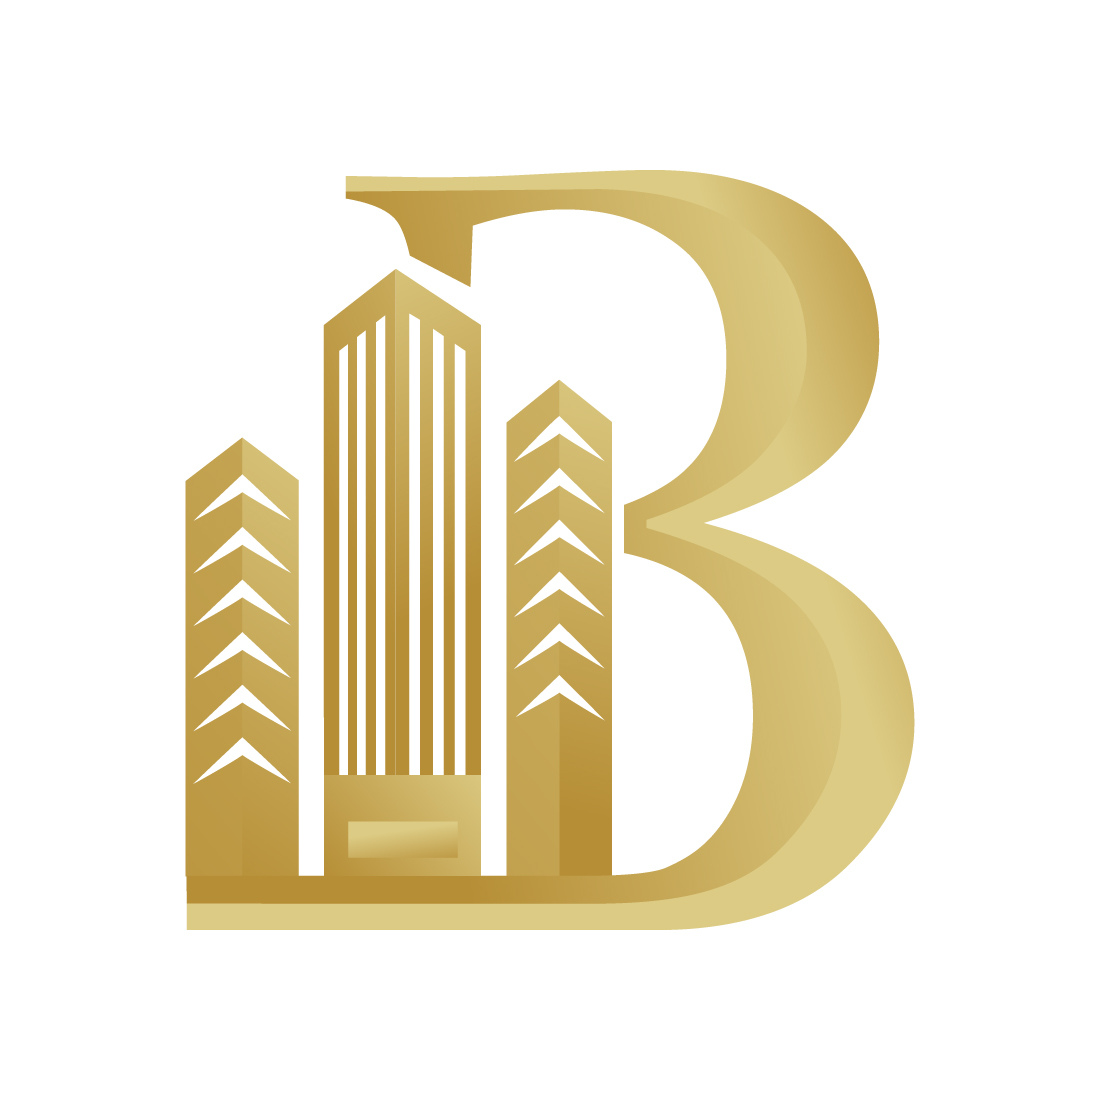 Luxury B Real Estate logo design vector images B logo design template arts B golden color Real Estate logo best business icon preview image.